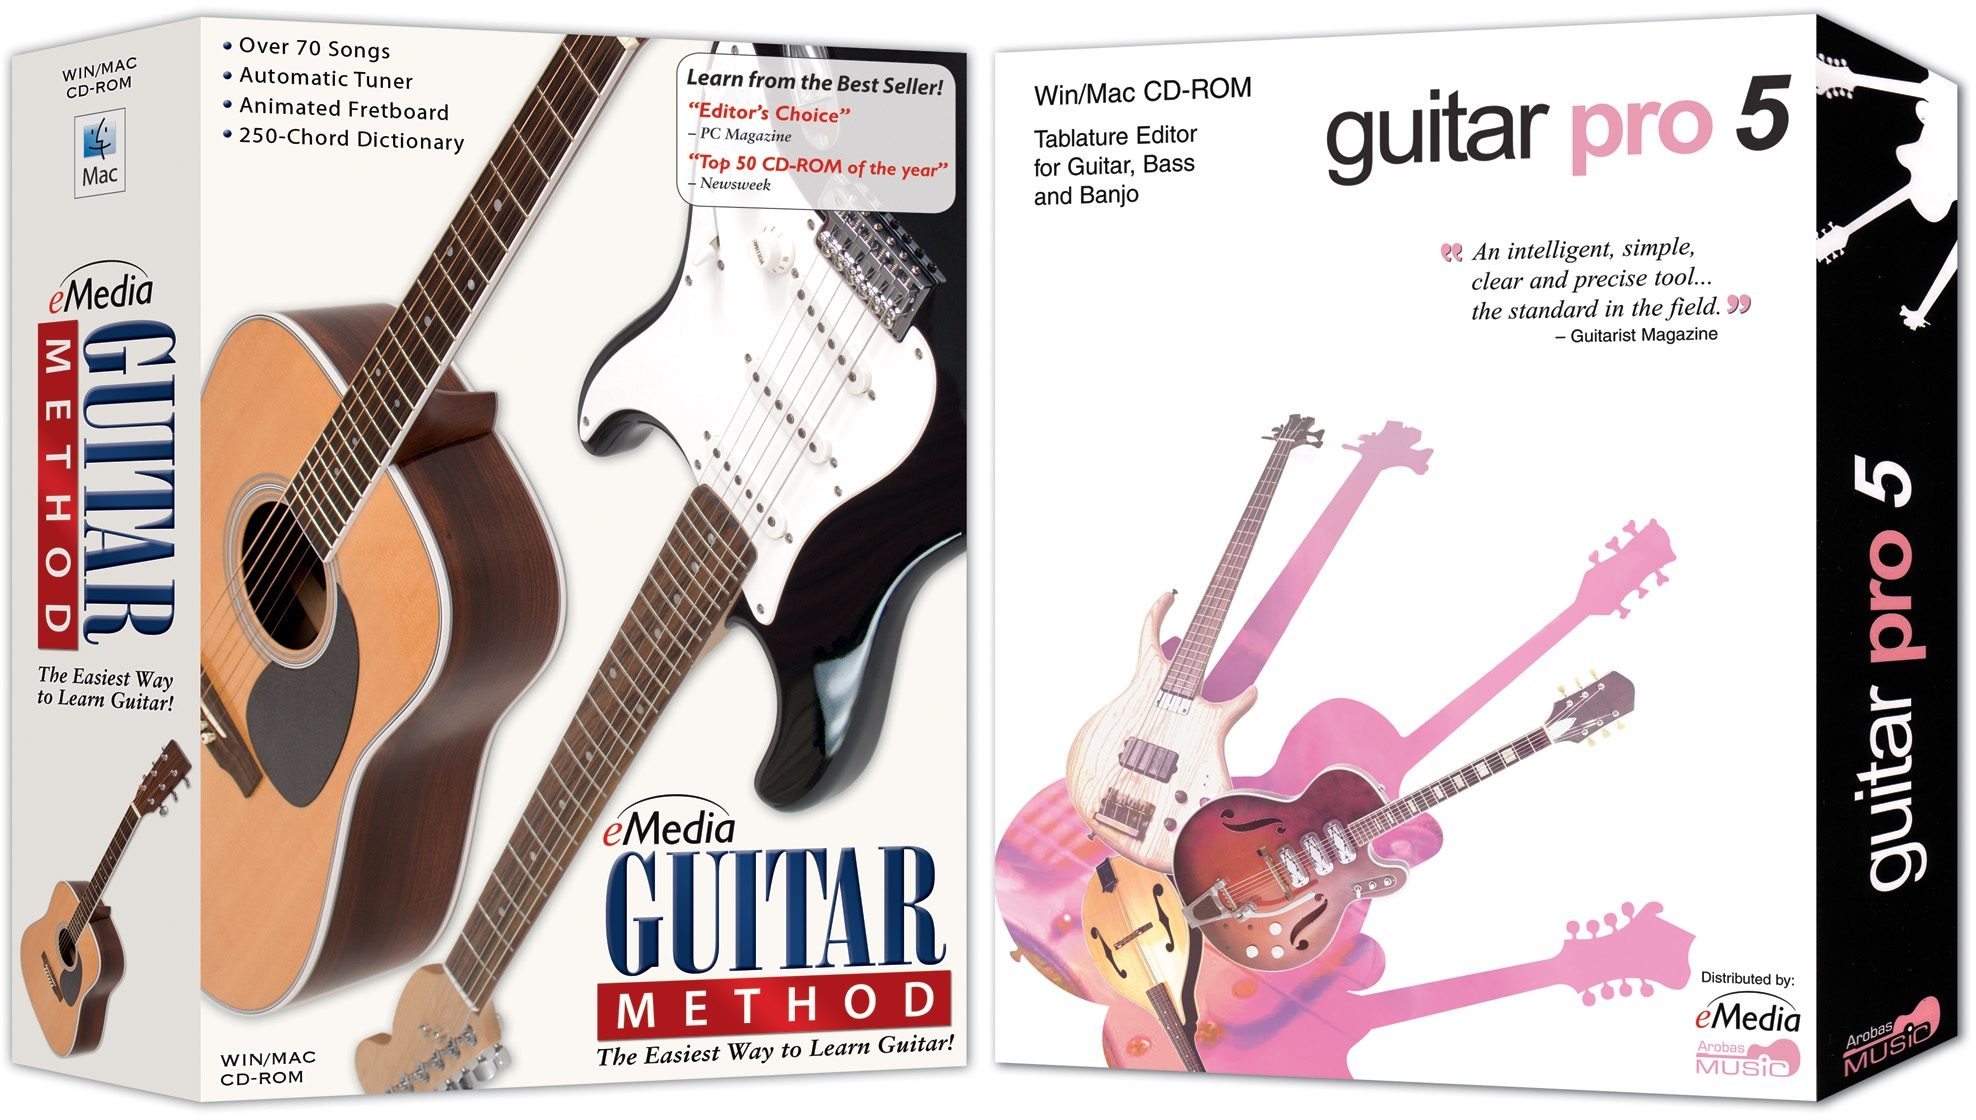 emedia guitar method cds latest version